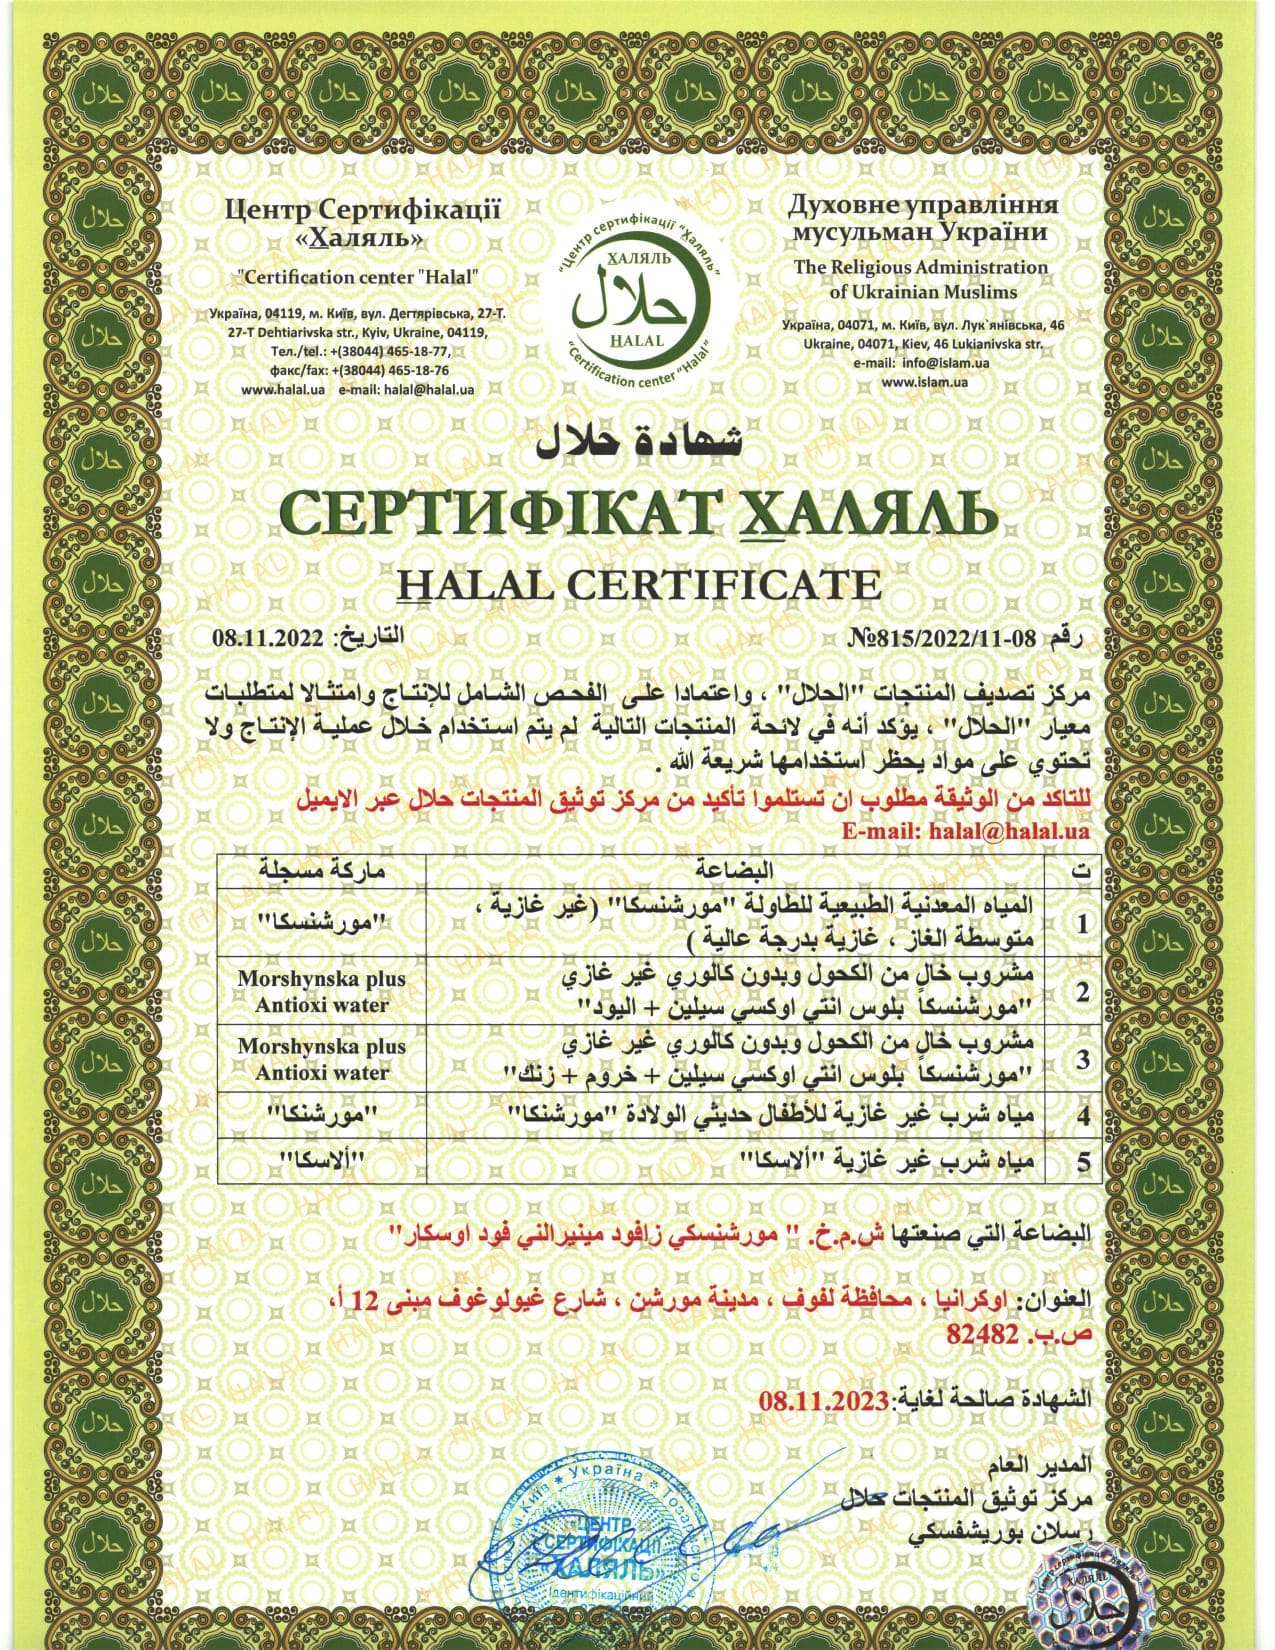 Sertificate_halal_ar.jpg